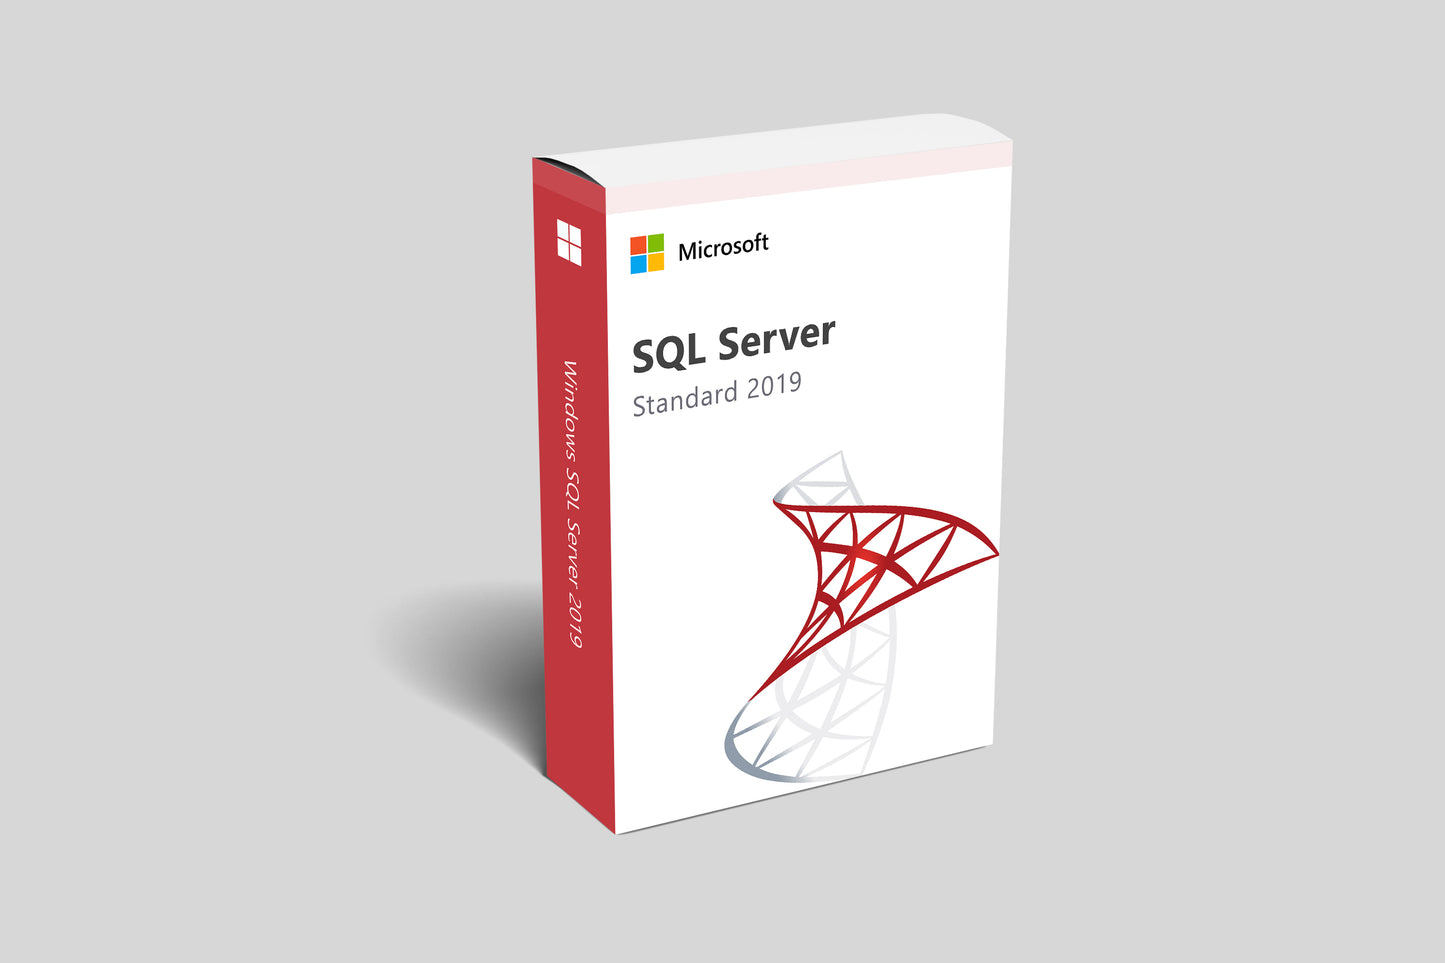 Microsoft SQL Server 2019 Standard - License + 10 CALs